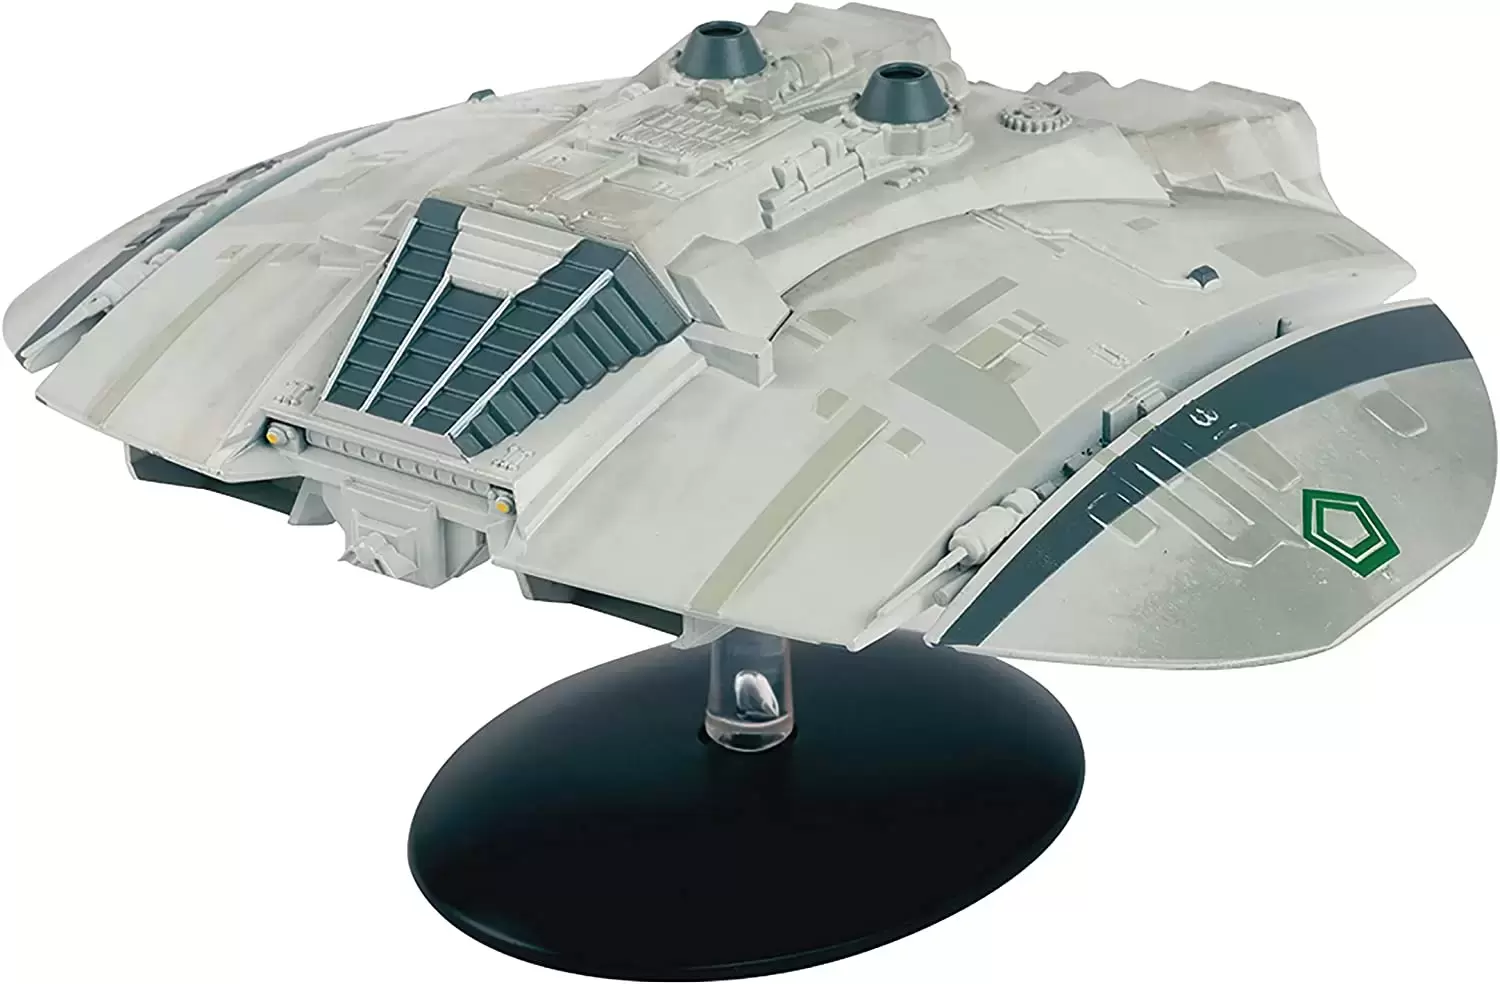 Battlestar Galactica - The Official Ships Collection - Battlestar Galactica - Classic Cylon Raider